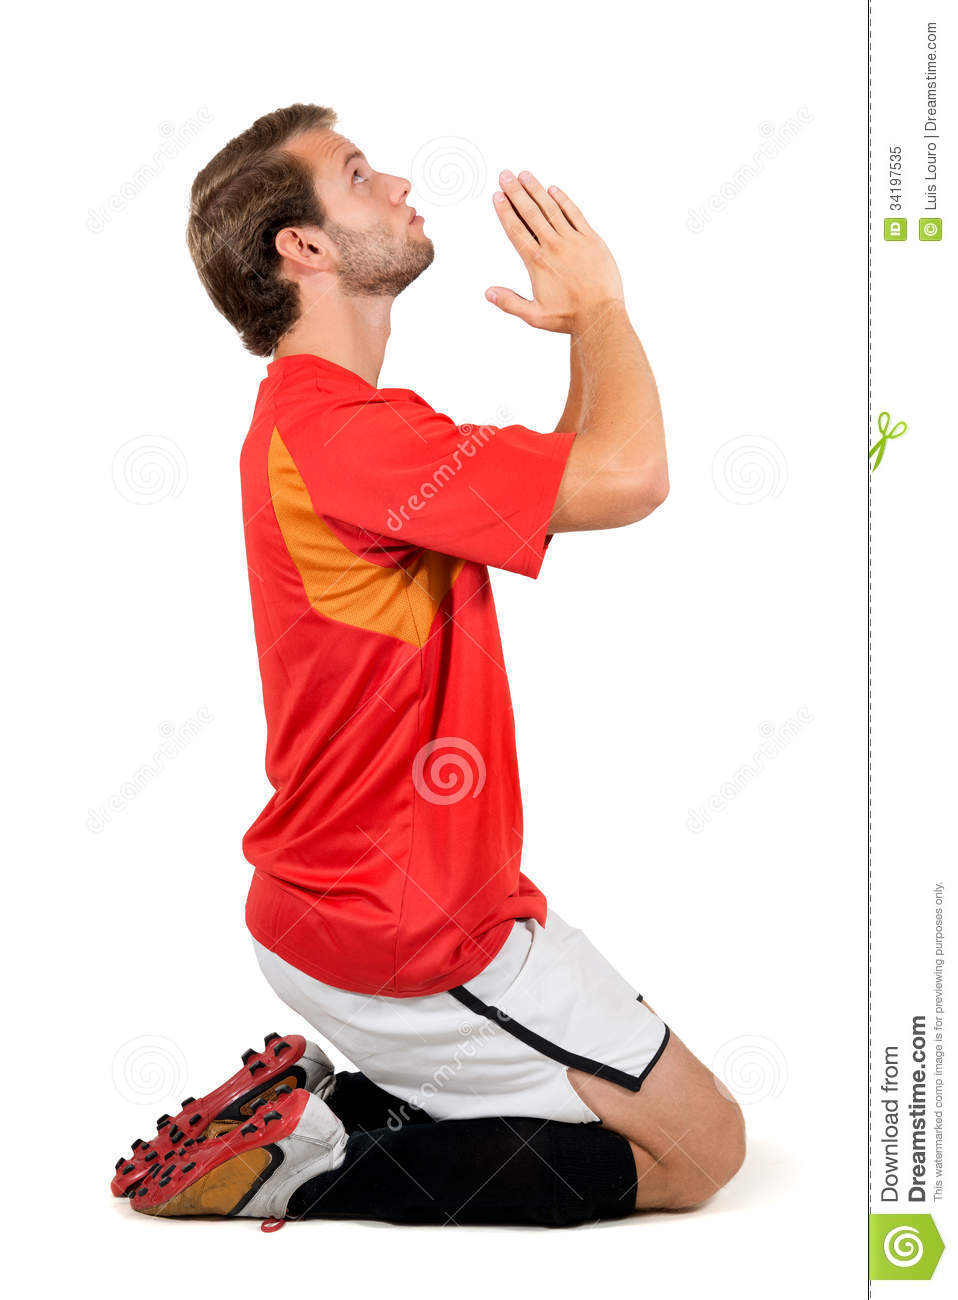 Football Player Praying Royalty Free Stock Photo   Image  34197535